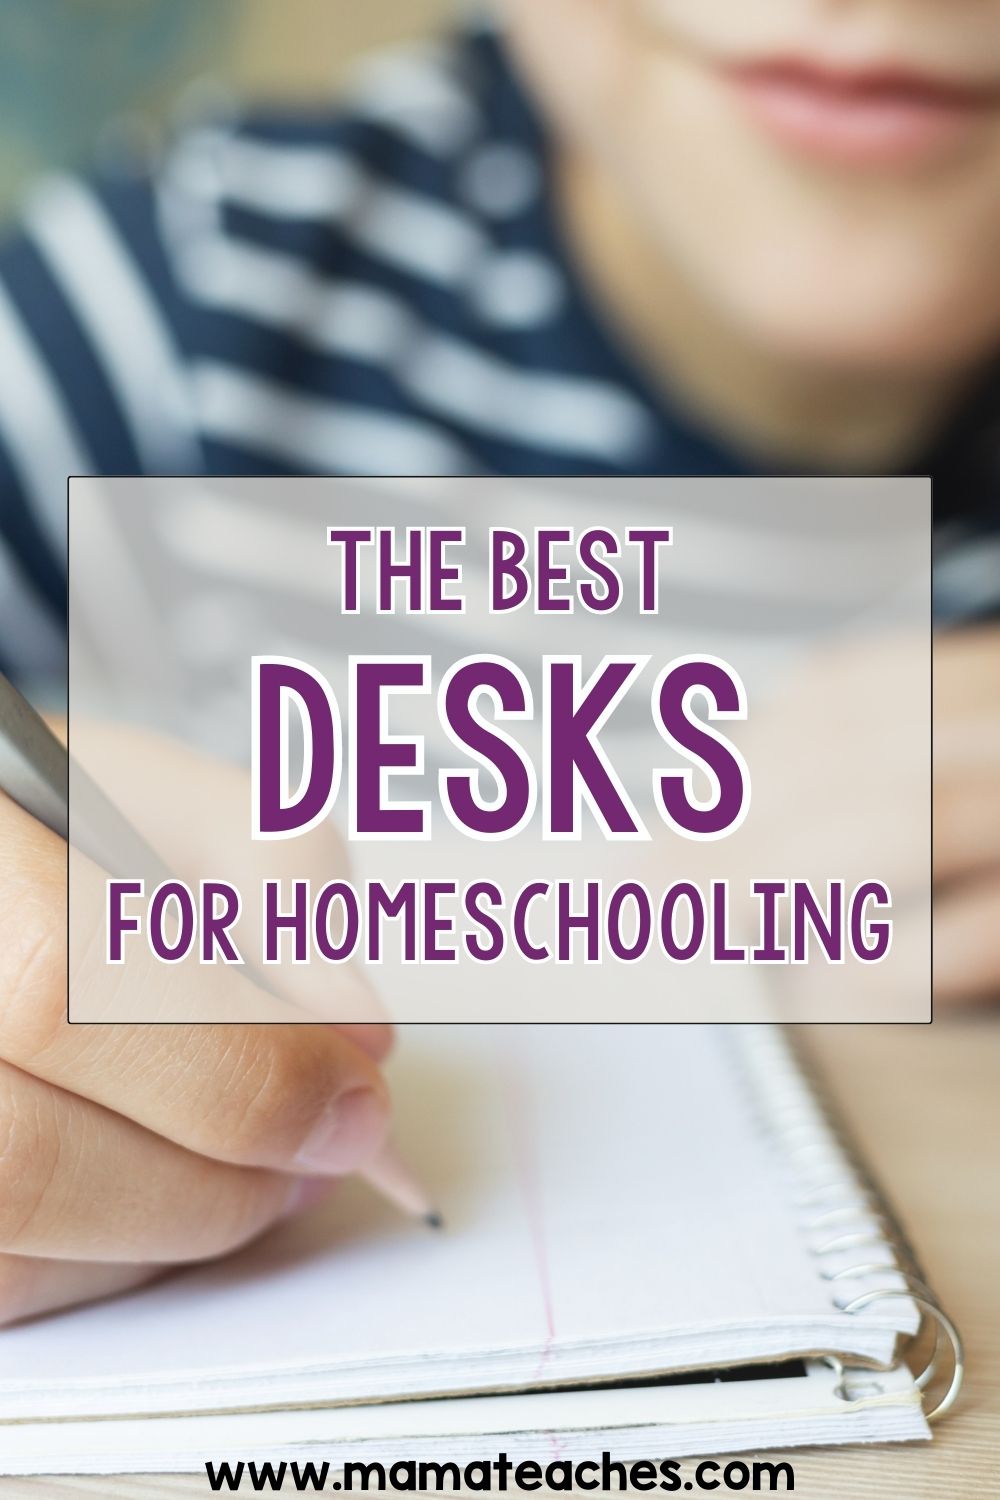 The Best Desks for Homeschooling